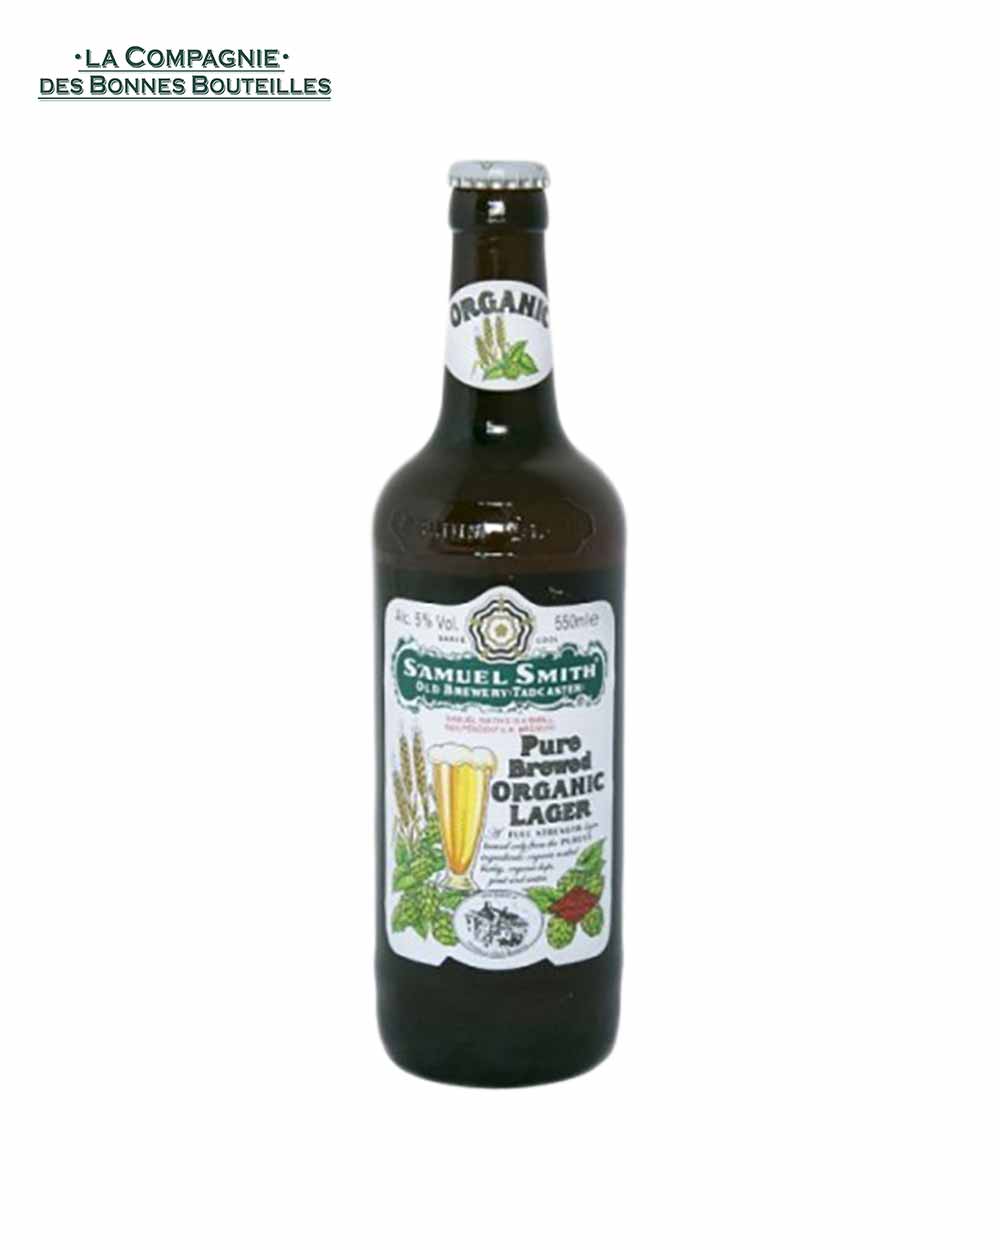 Bière samuel smith - Organic lager VP 35 cl